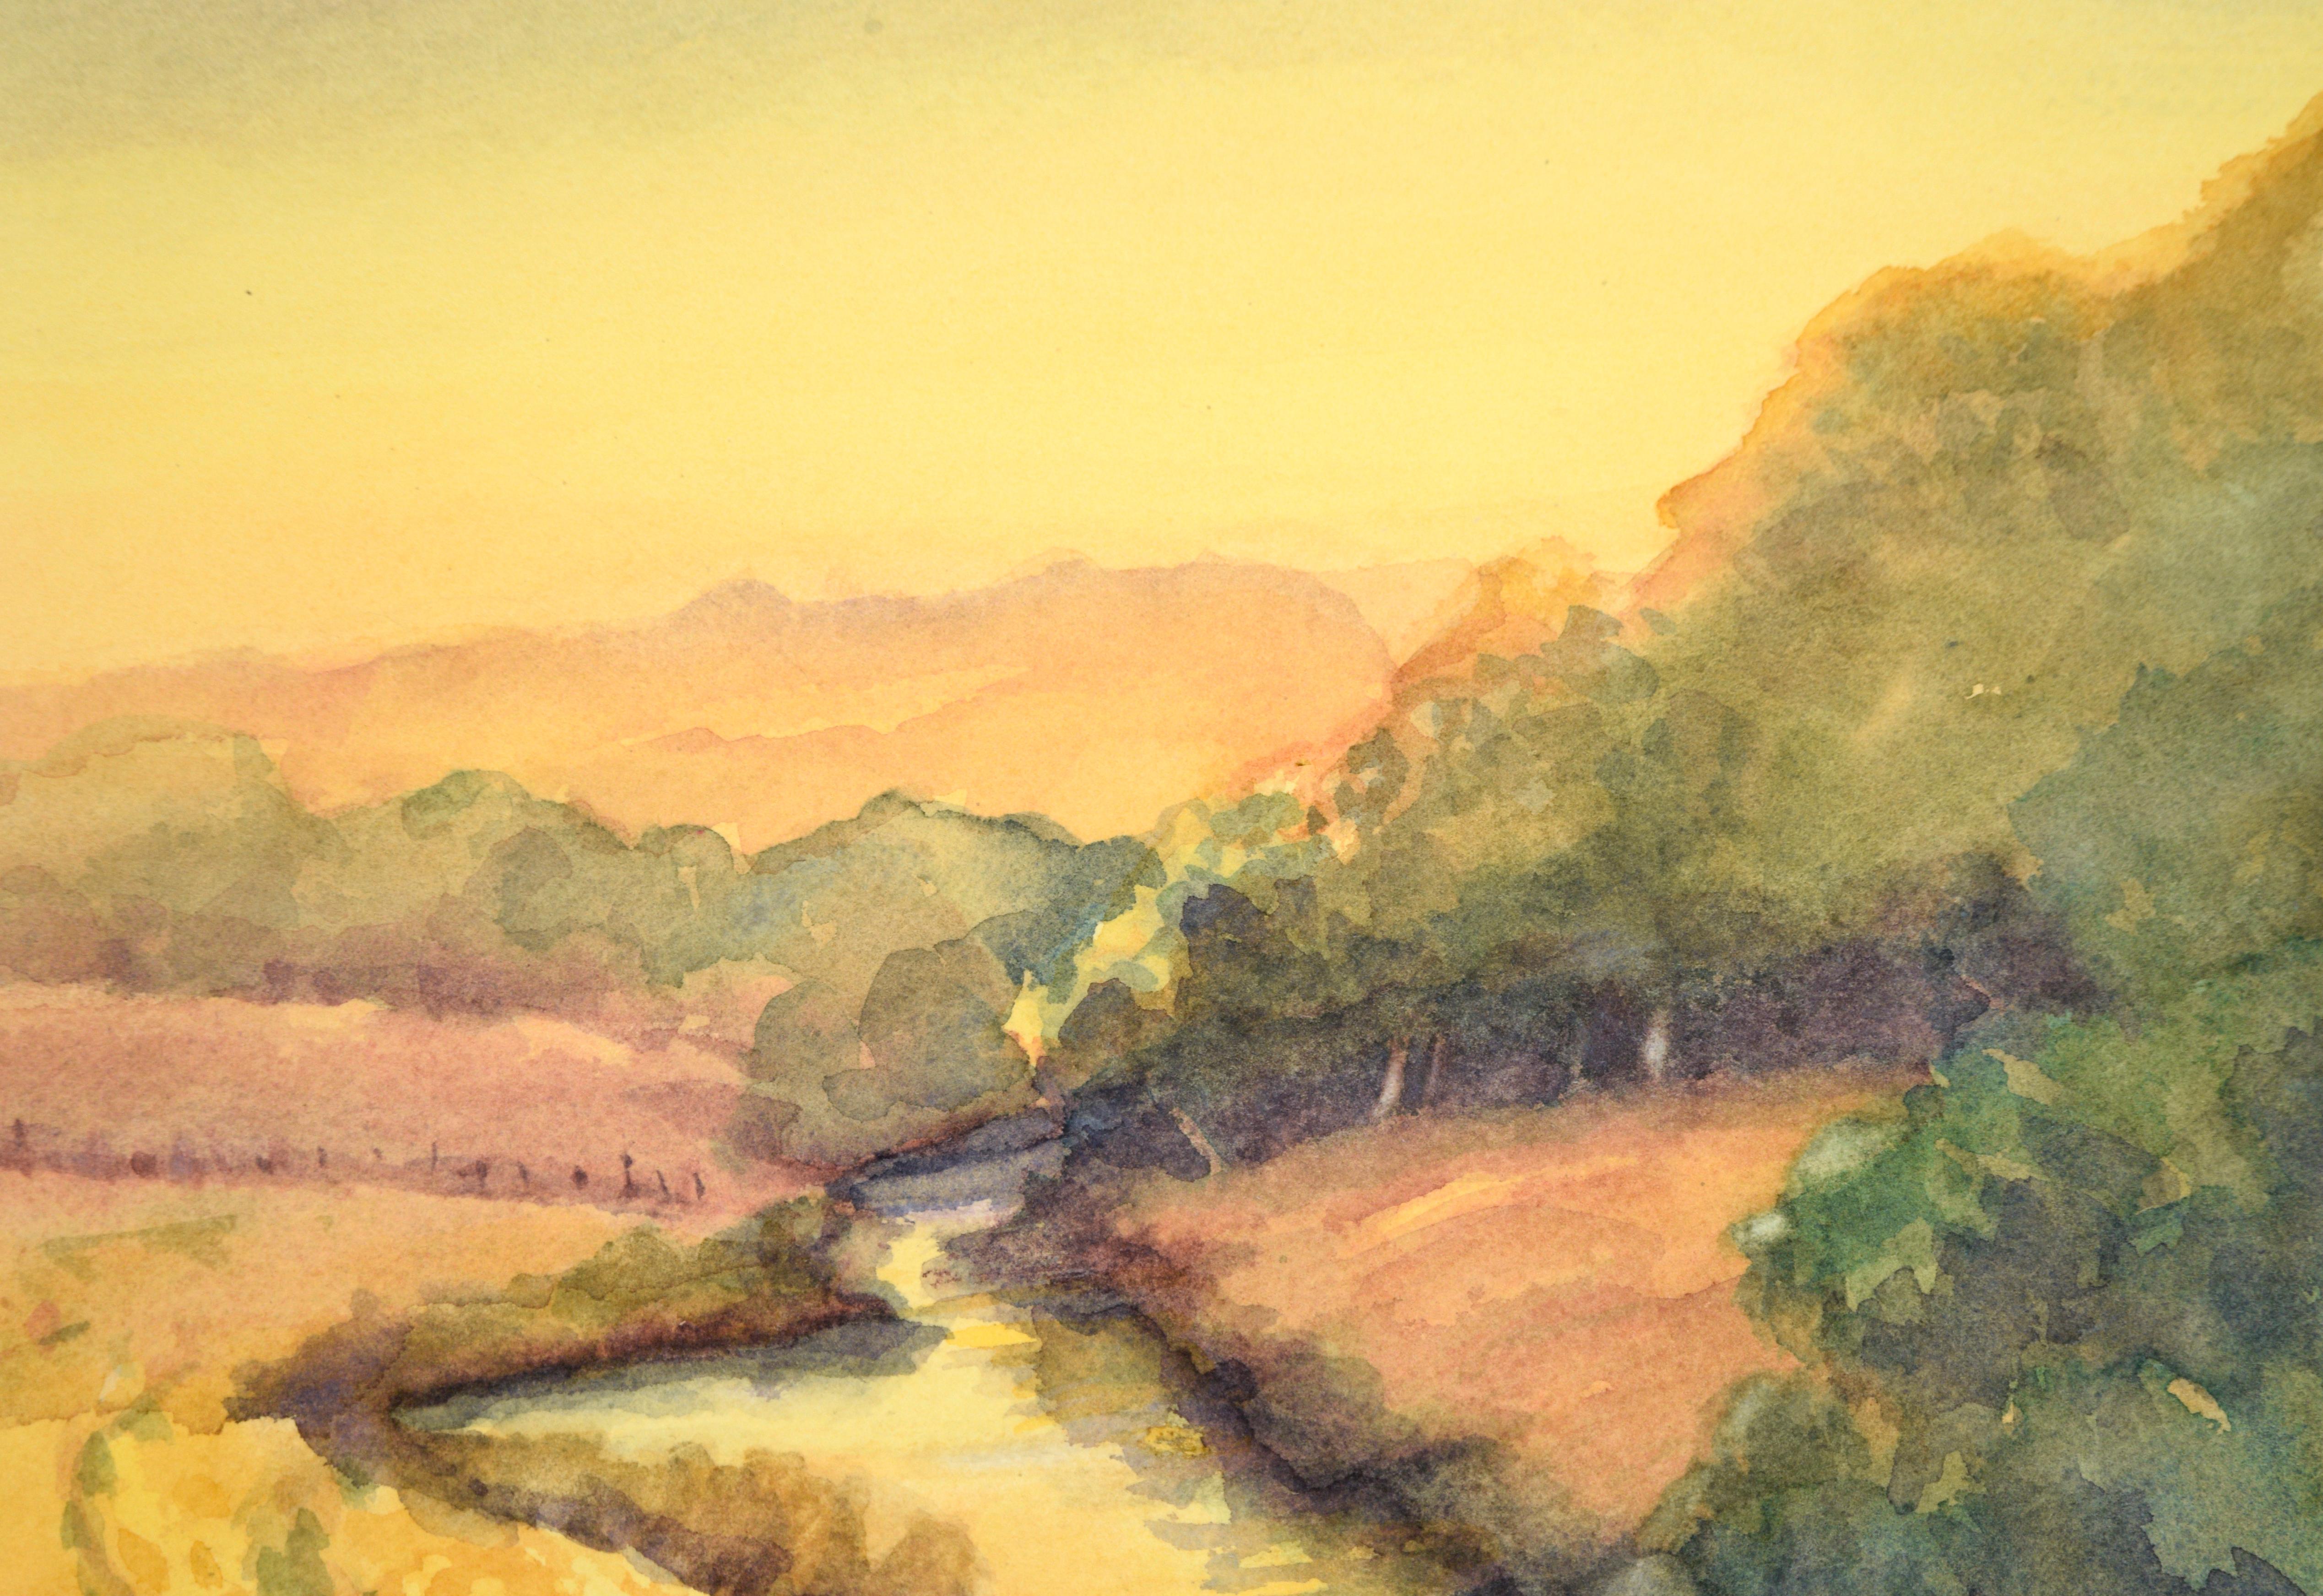 Golden Hour at the River - Watercolor Landscape on Paper - Beige Landscape Art by Rosalind O'Neal